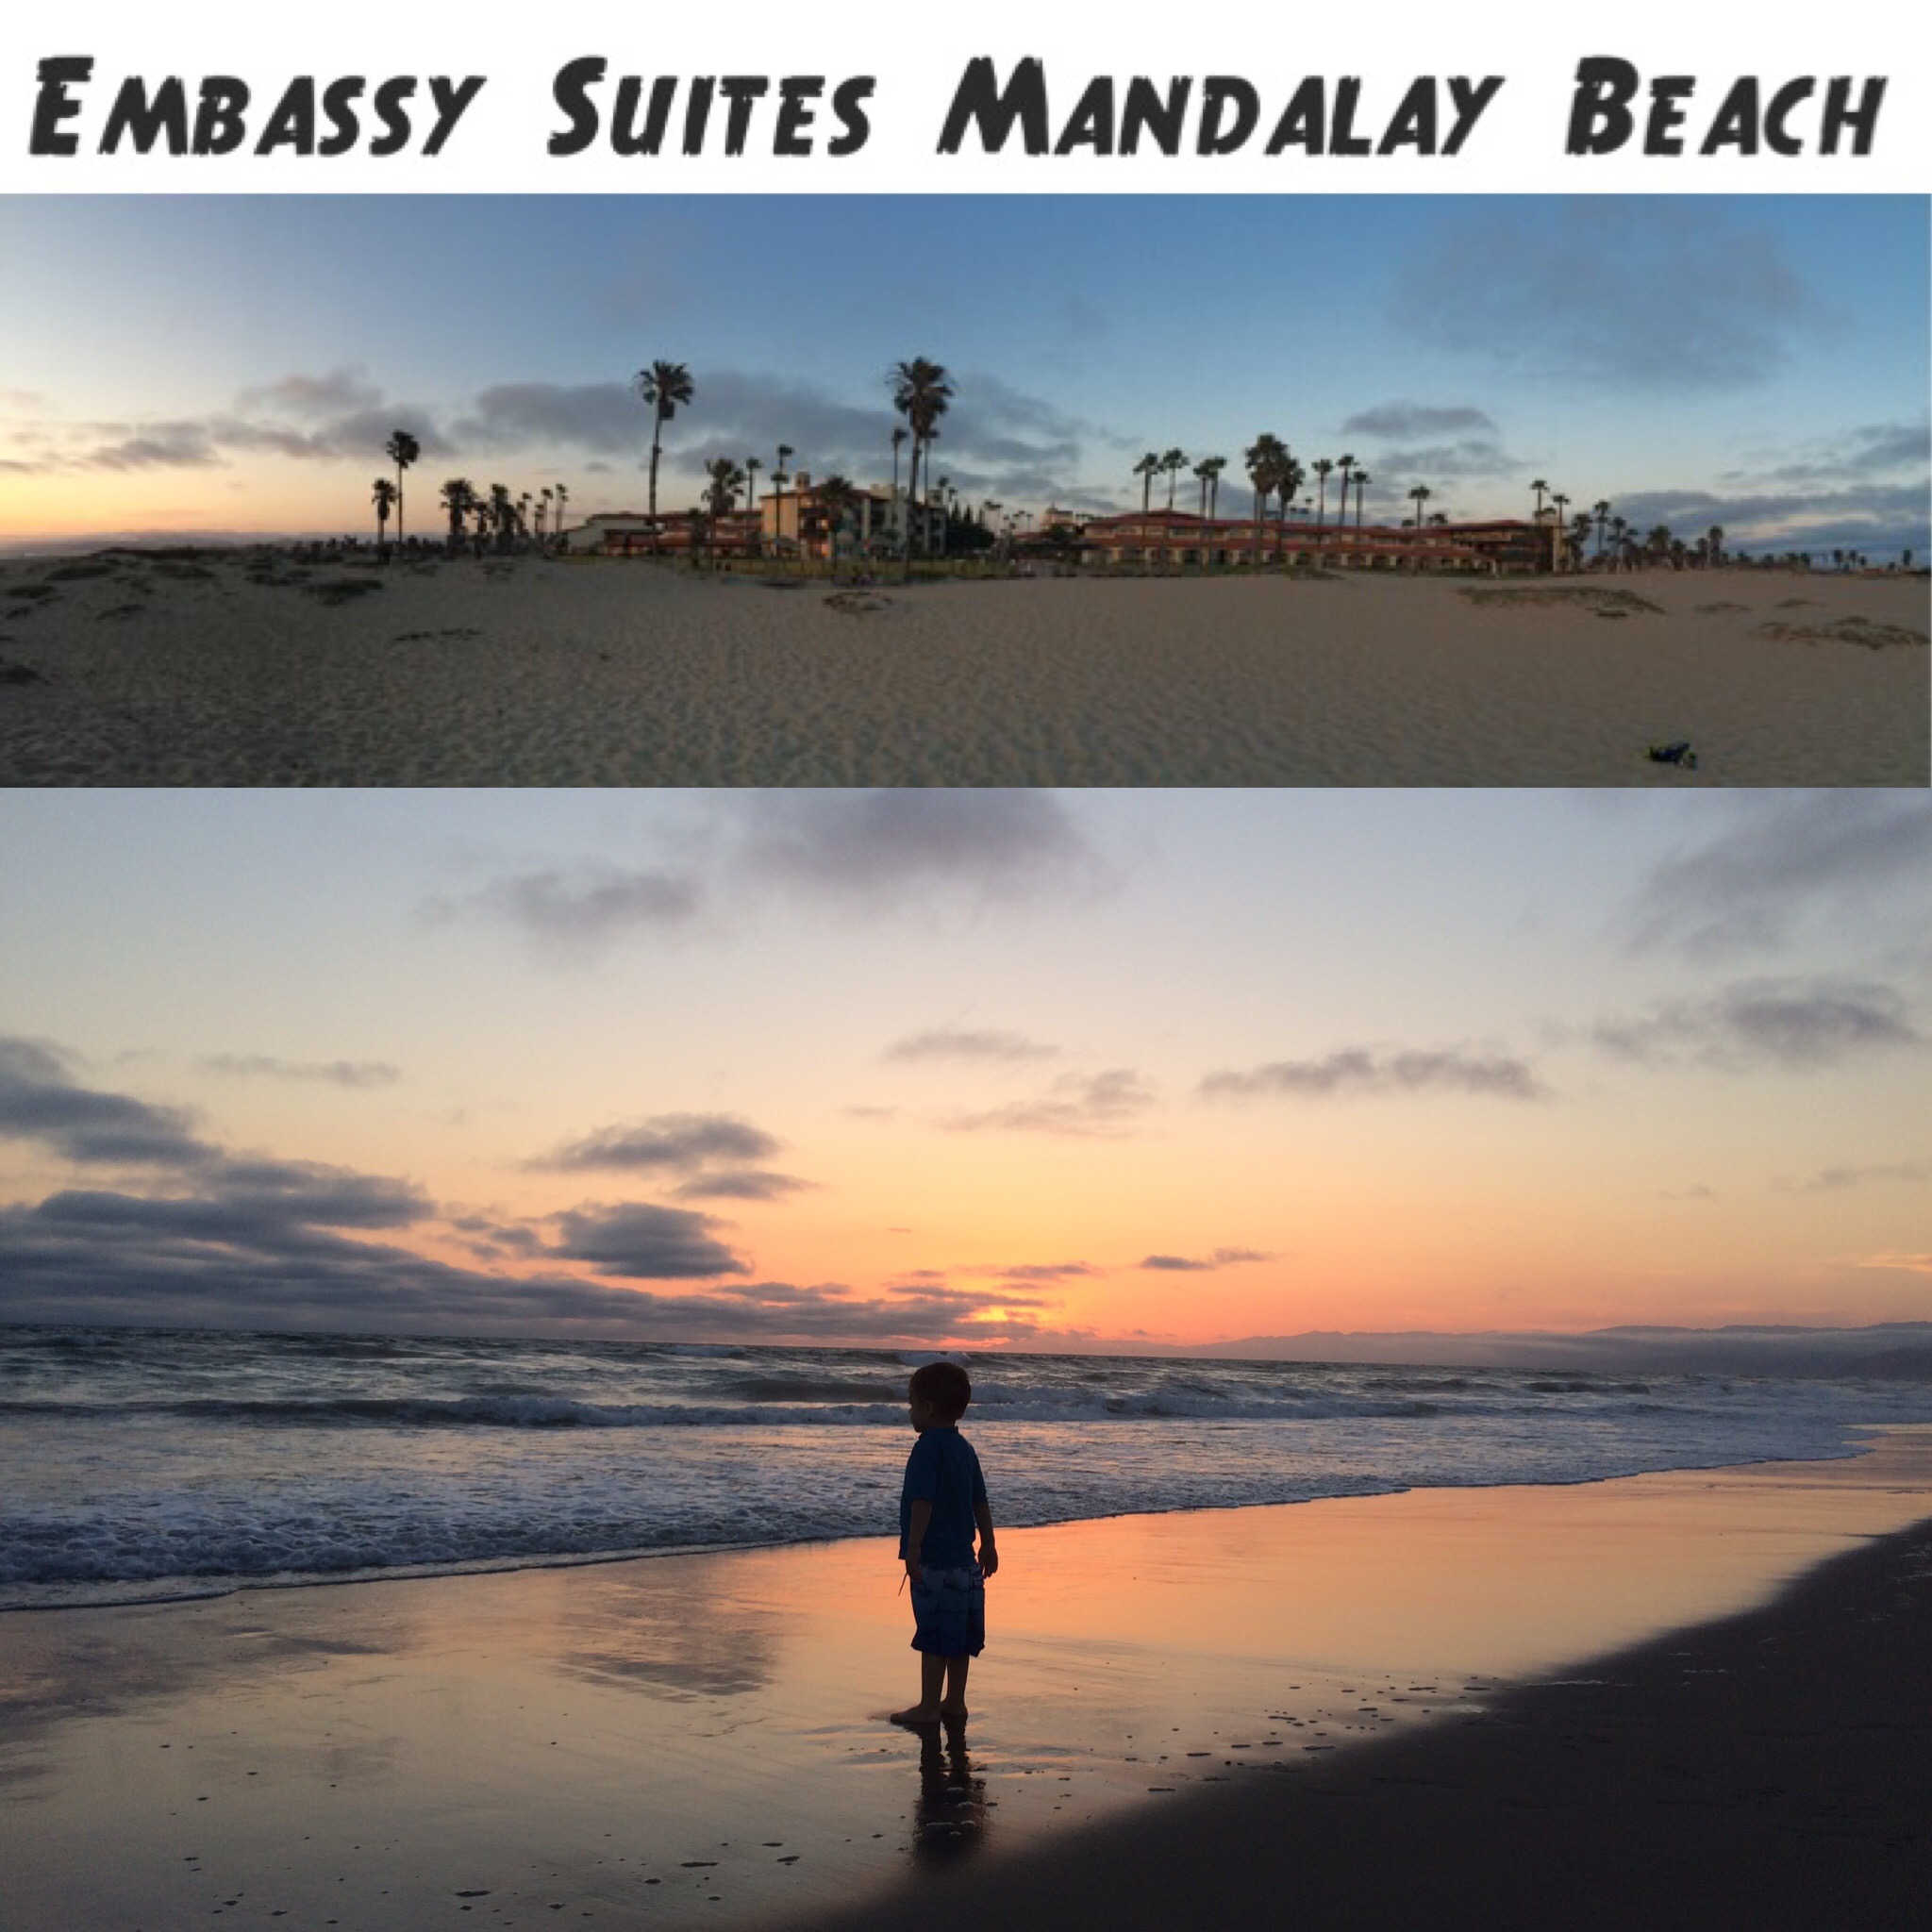 Embassy Suites Mandalay Bay